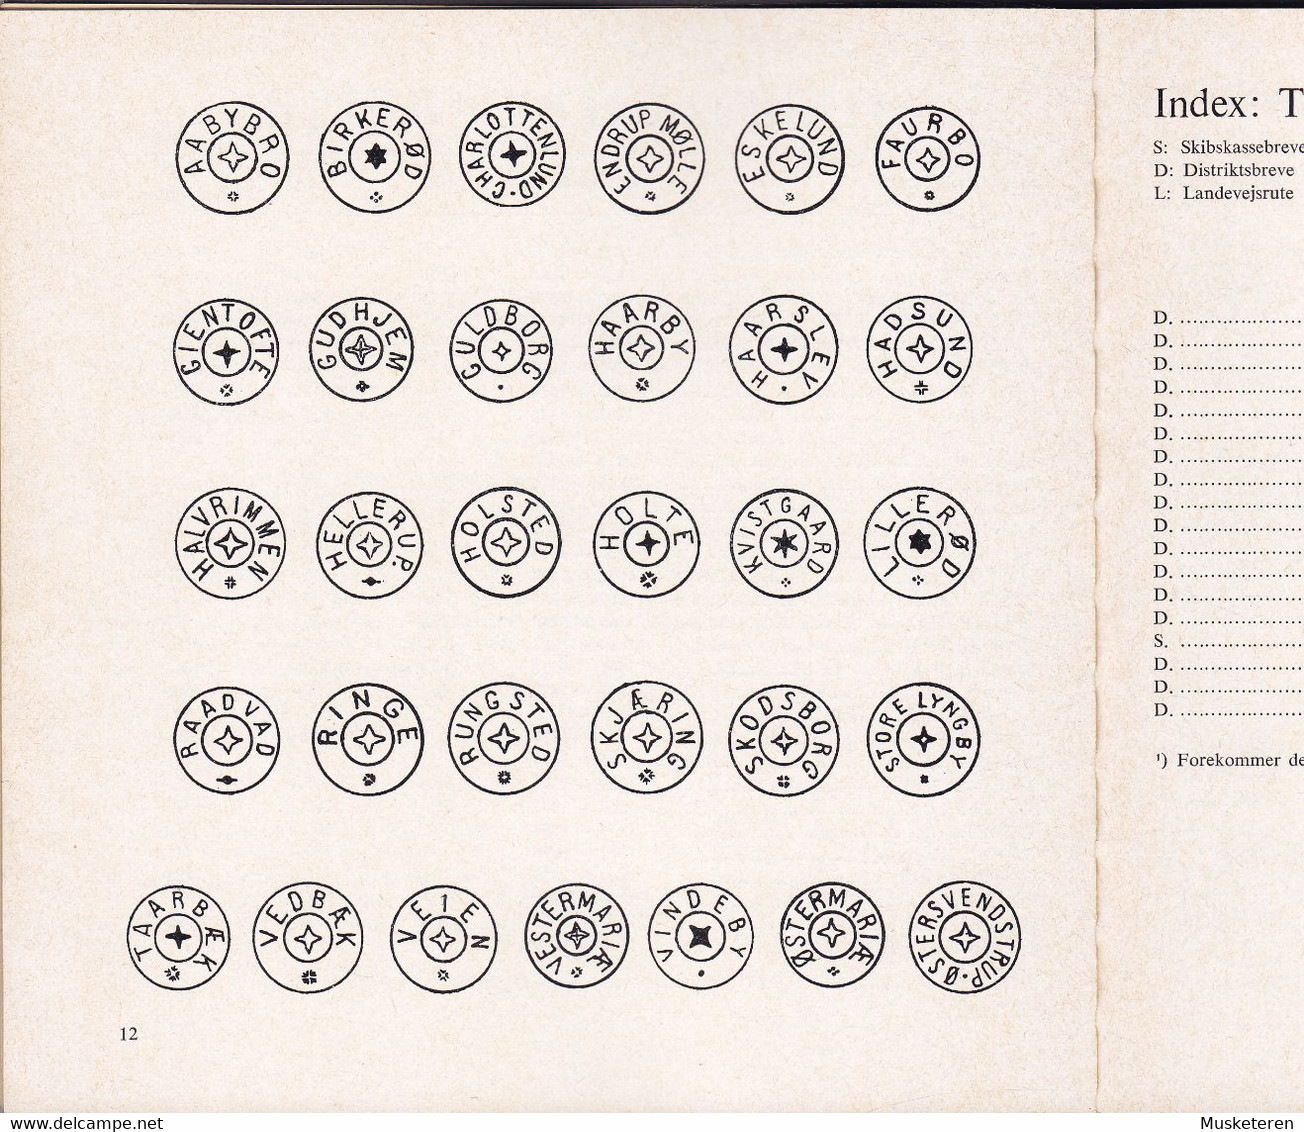 Denmark KE Special Katalog Stjernestempler & Esrumtype Stempler 1973/74 (5 Scans) - Andere & Zonder Classificatie